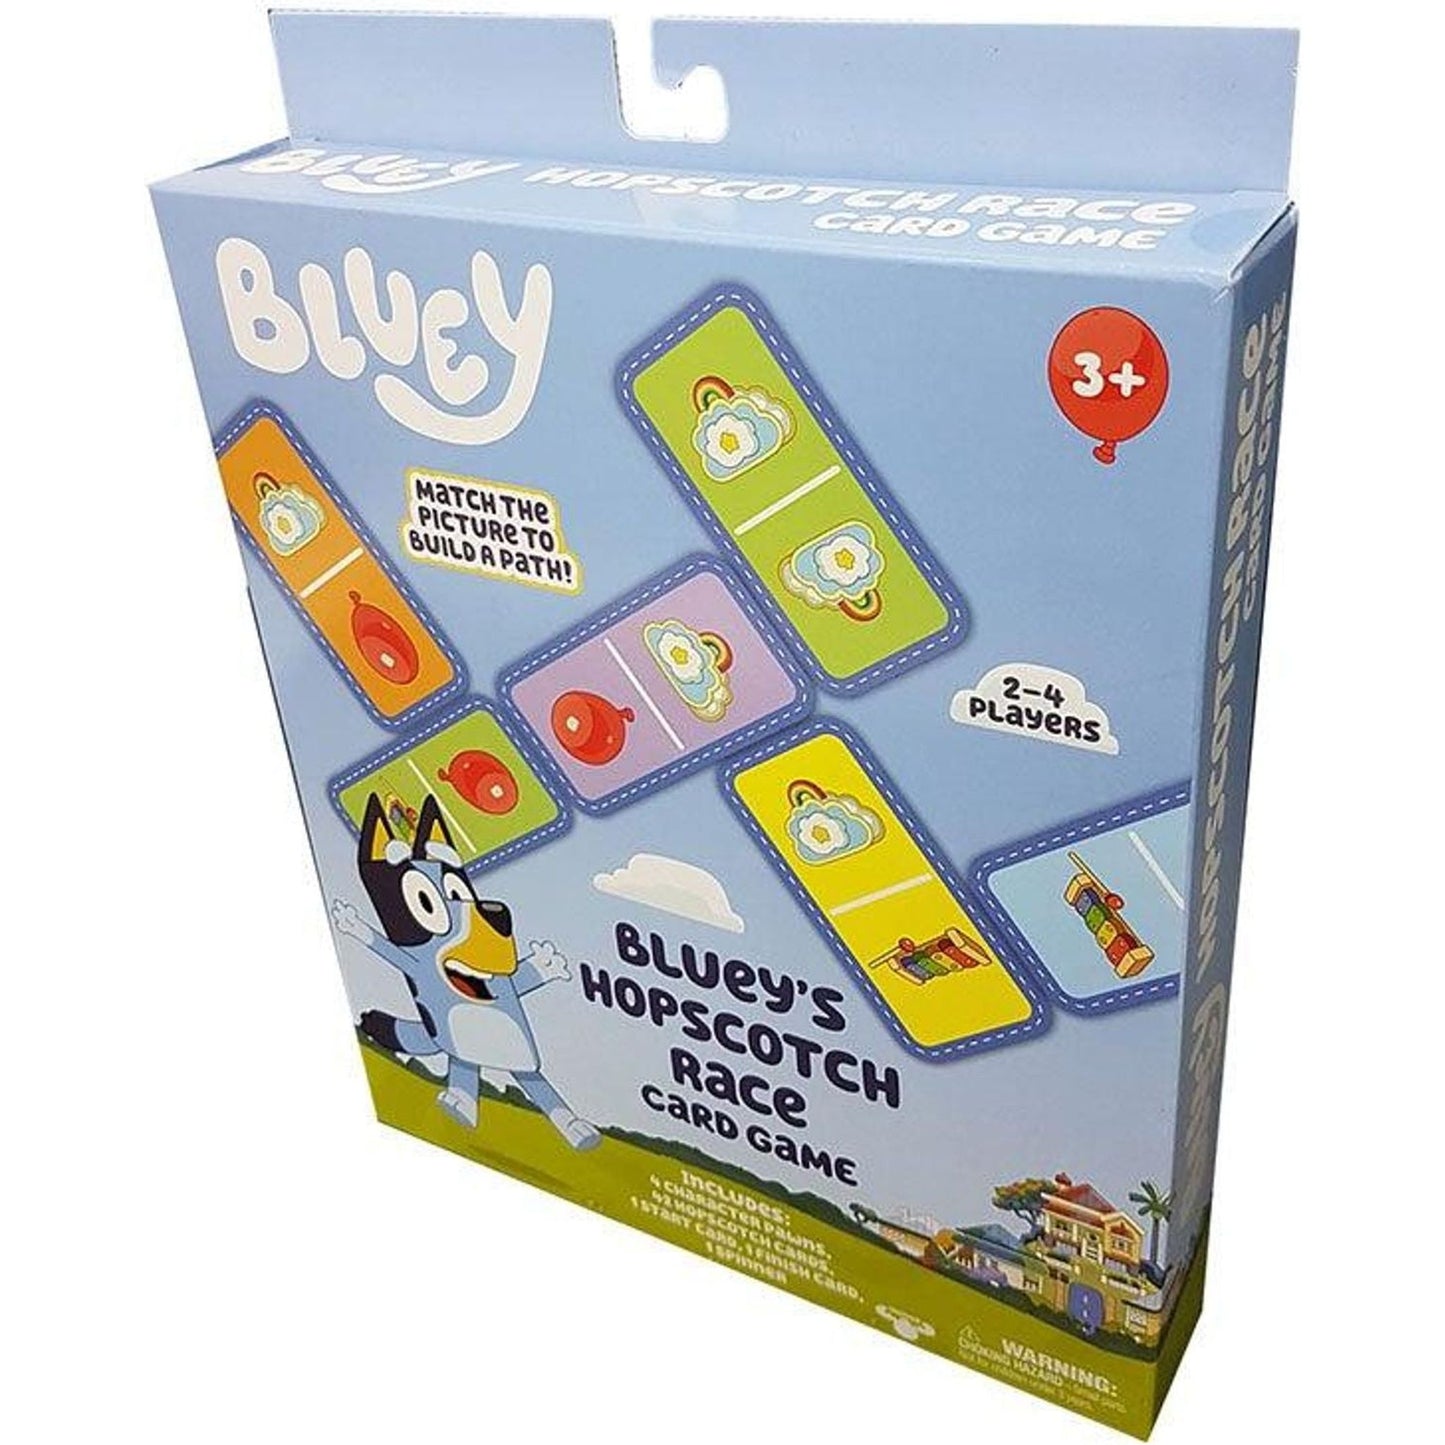 Bluey's Hopscotch Race Game - Toybox Tales